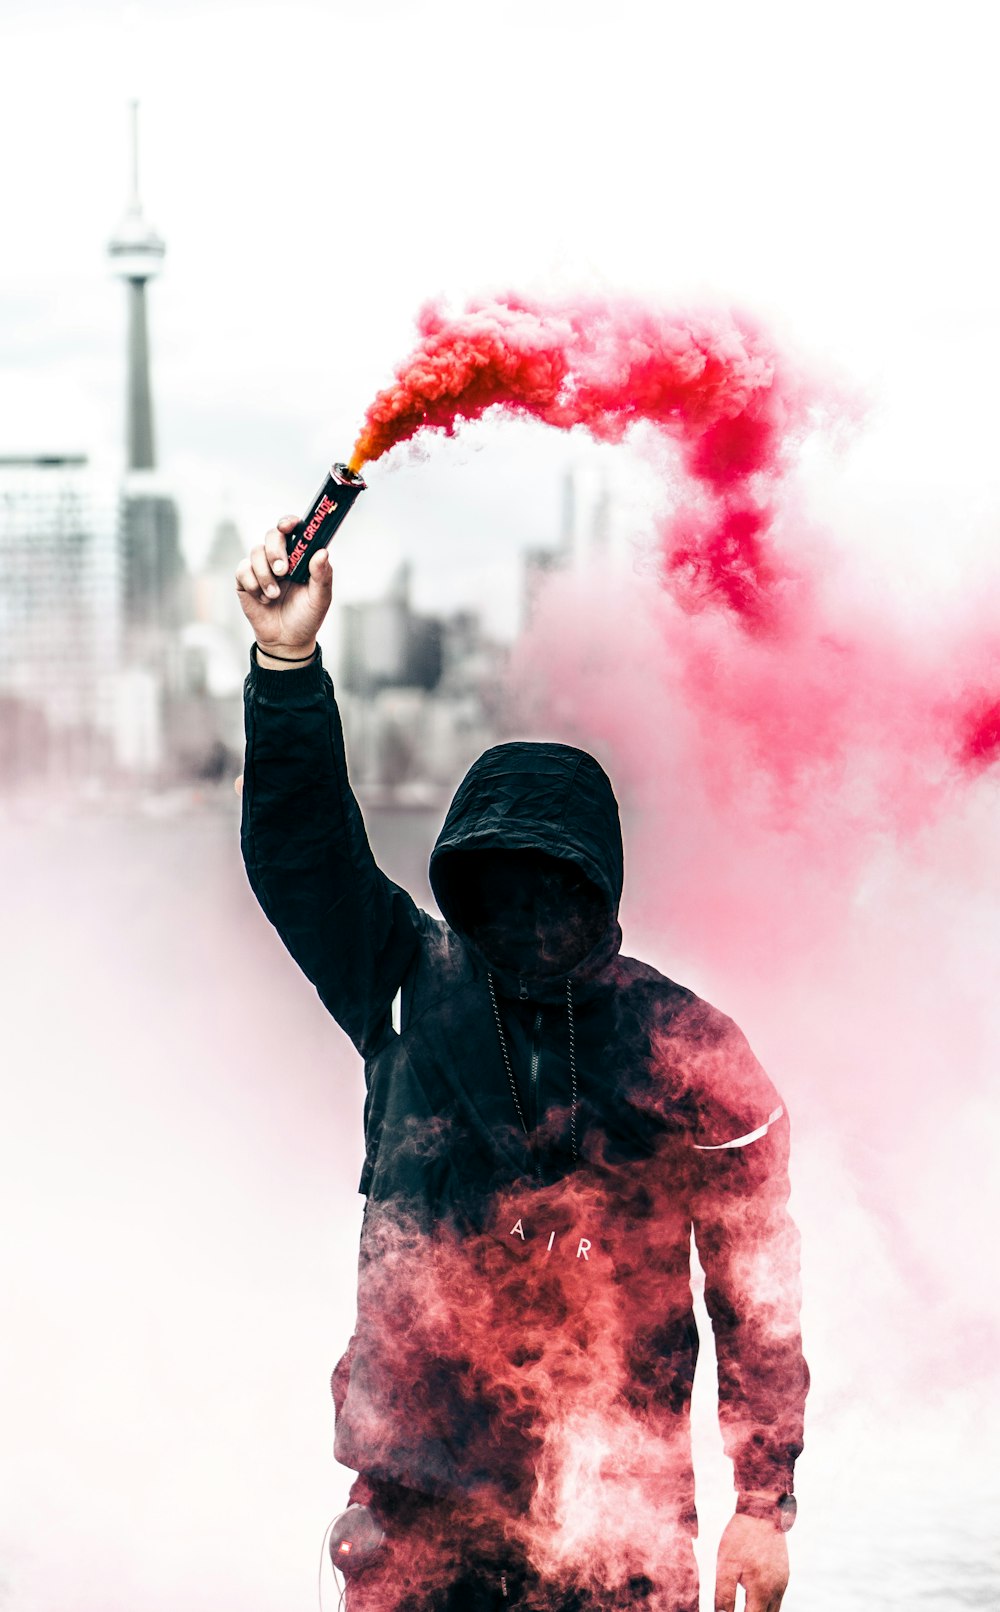 Femme couverte d'une bombe fumigène rose photo – Photo Rouge